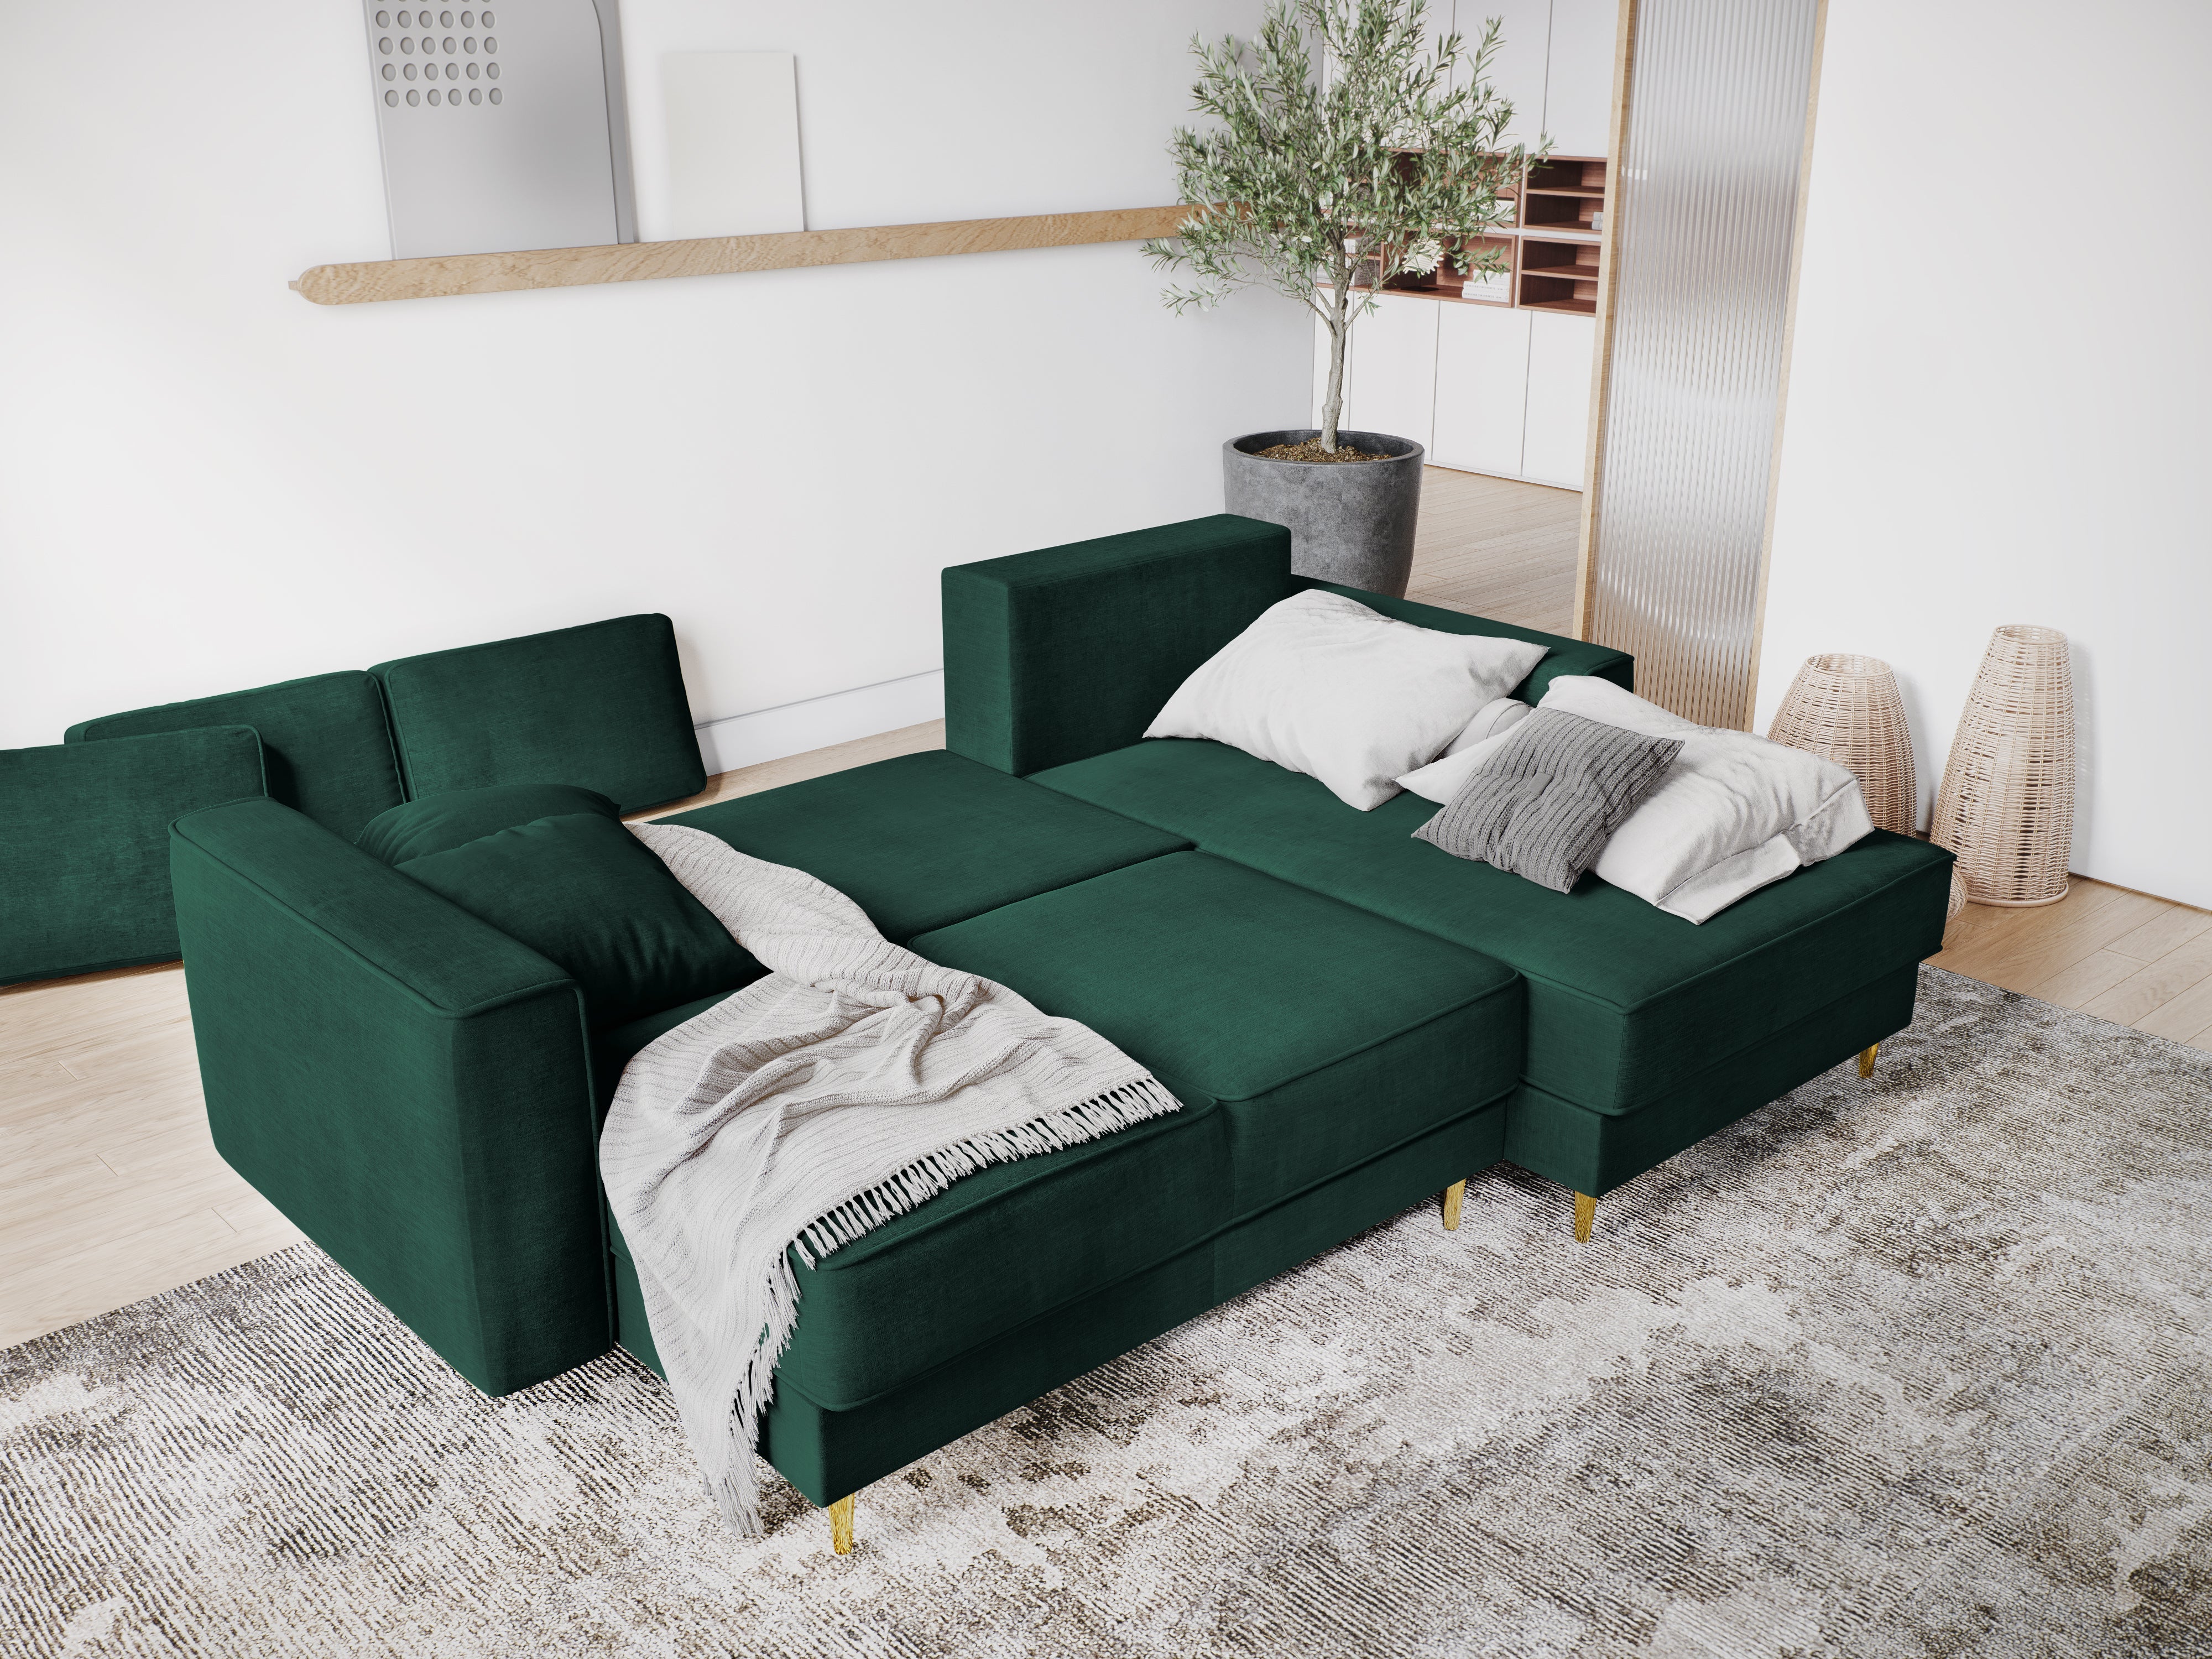 Corner with green sleeping function